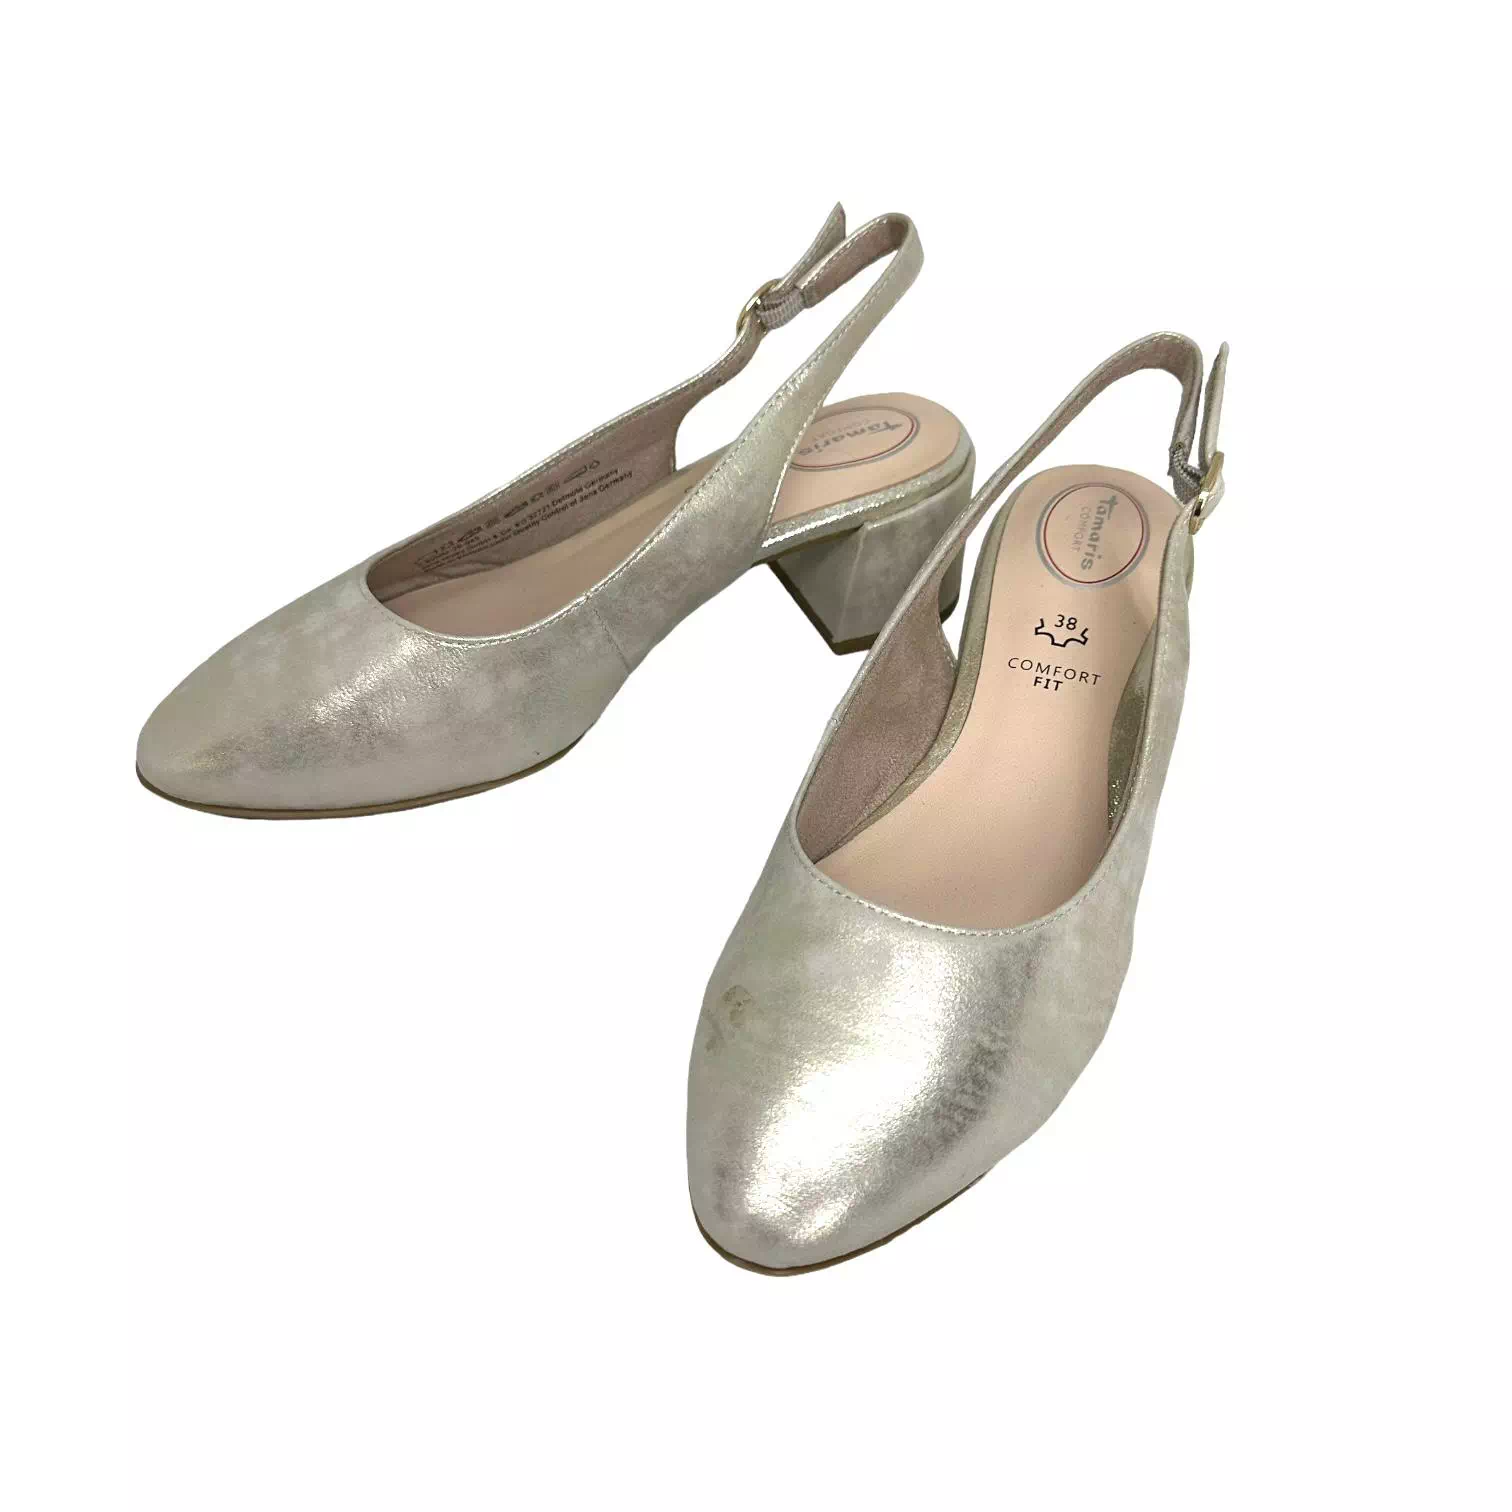 Pantofi Tamaris argintii decupati la spate